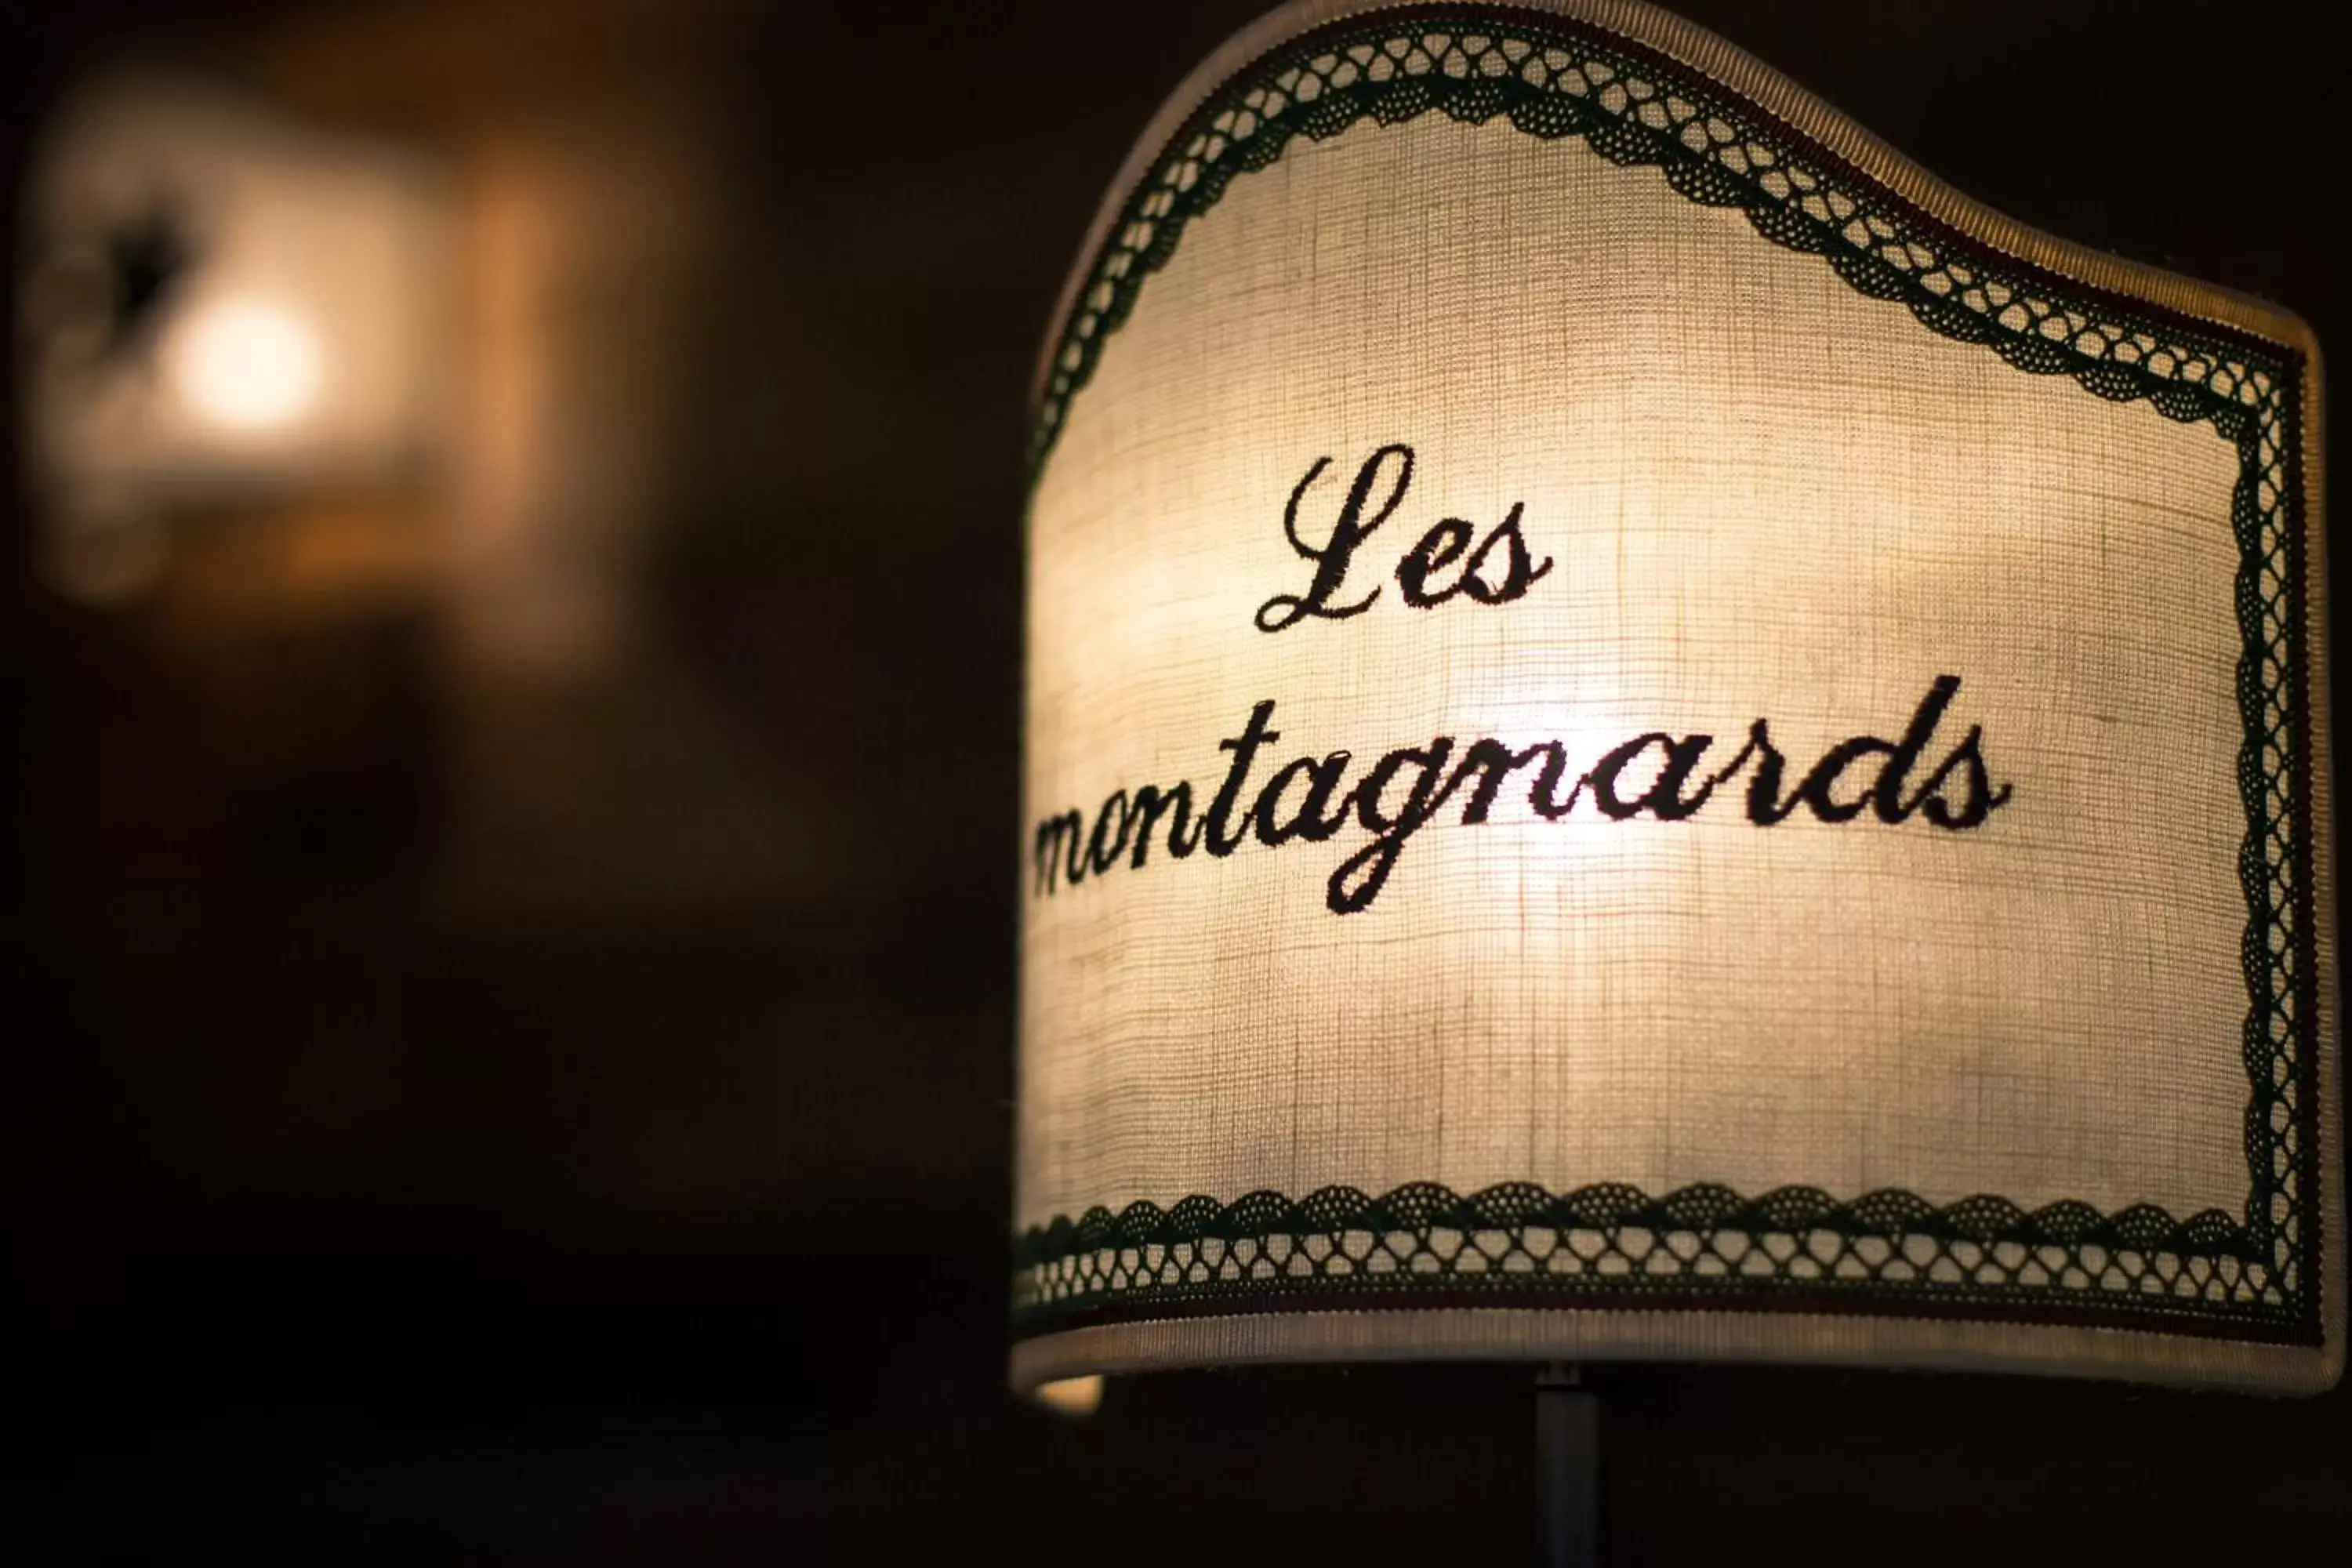 Decorative detail, Property Logo/Sign in Hotel Les Montagnards